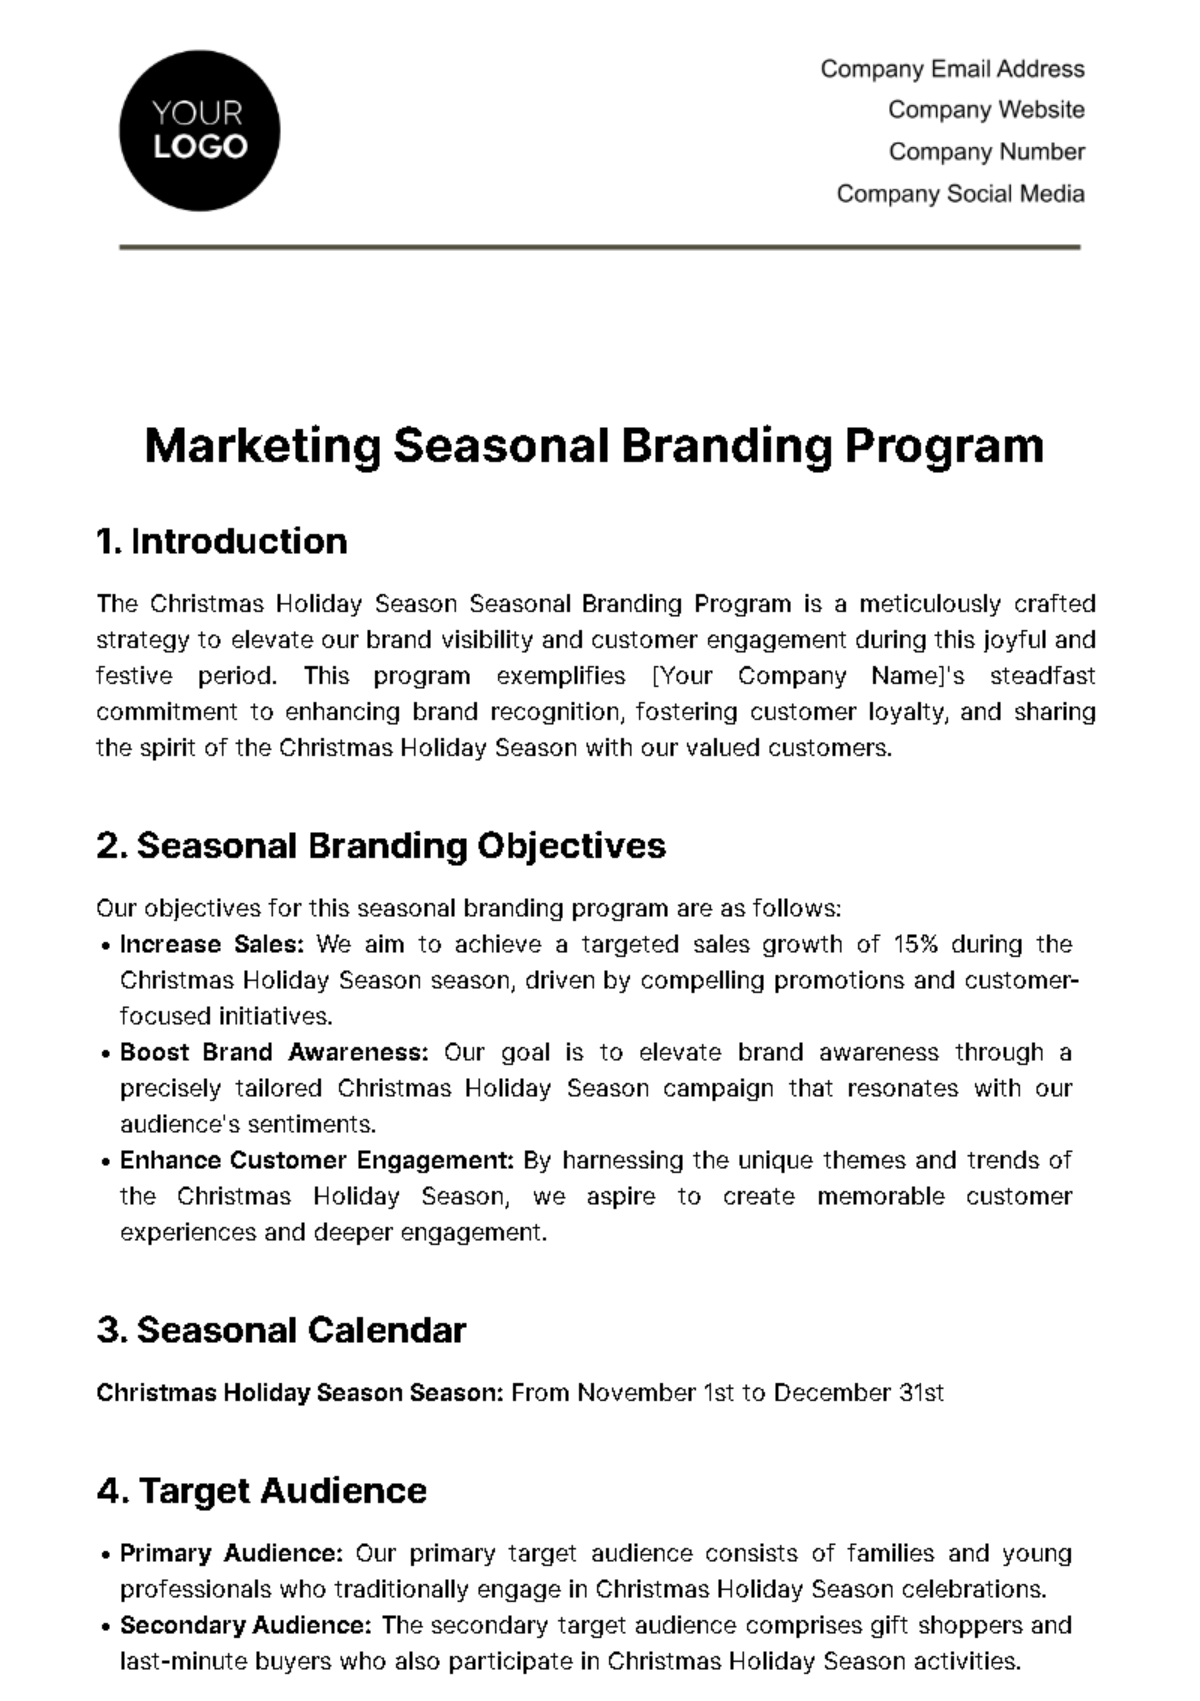 Marketing Seasonal Branding Program Template